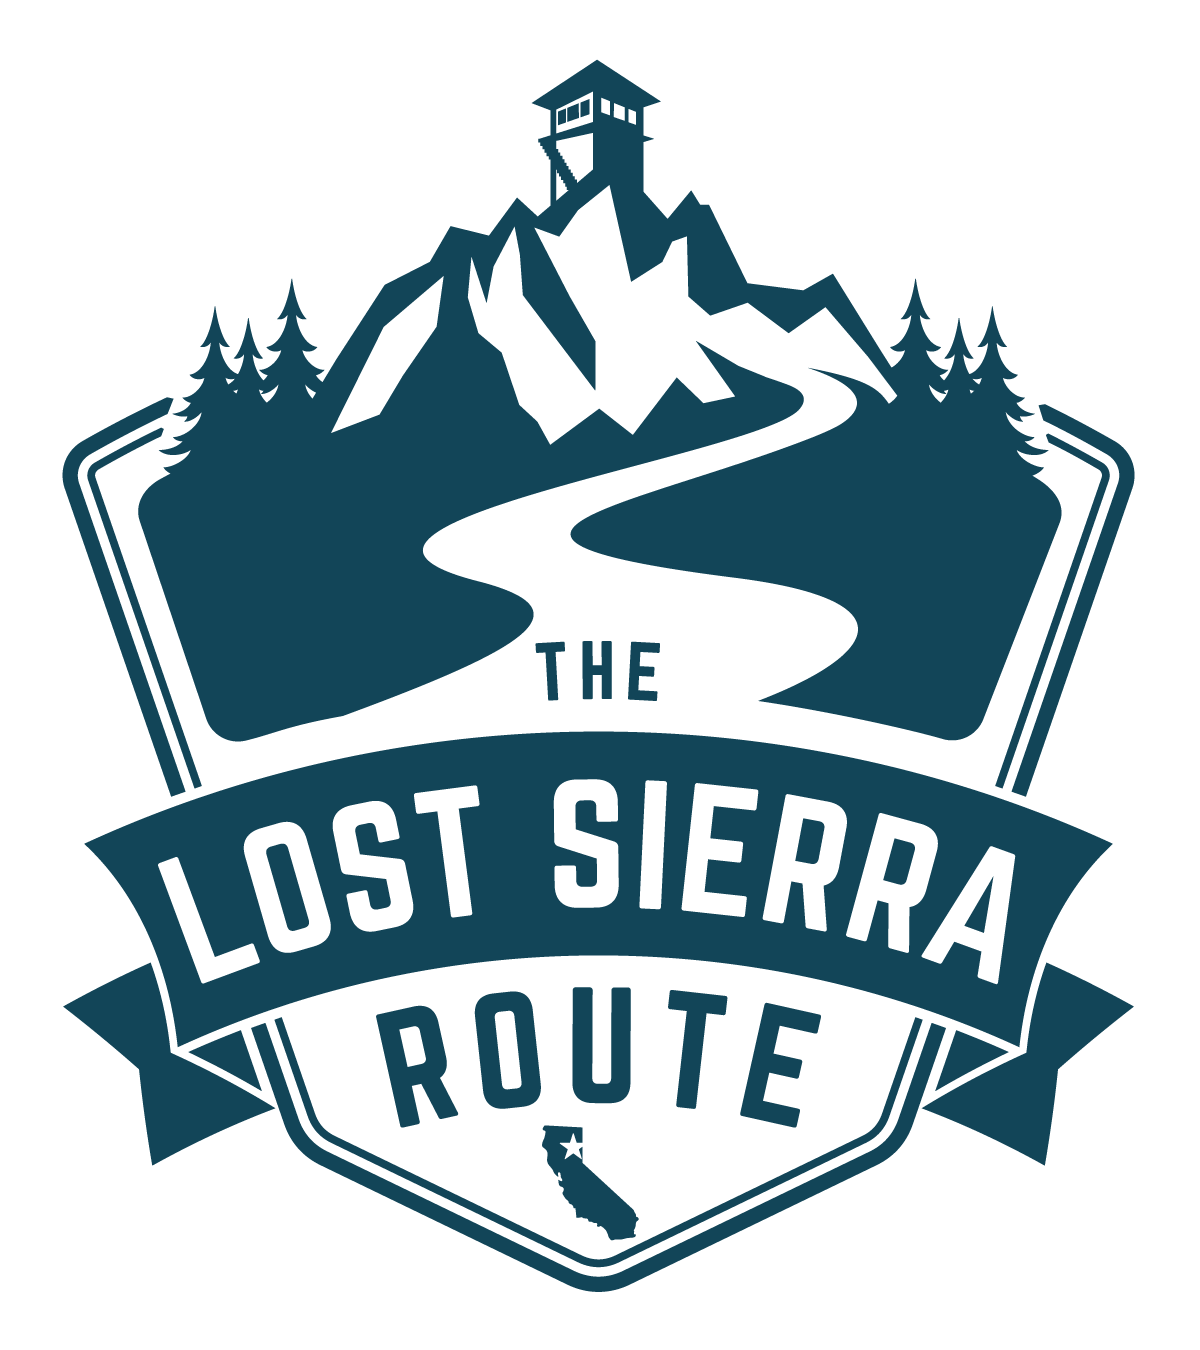 The Lost Sierra Route logo